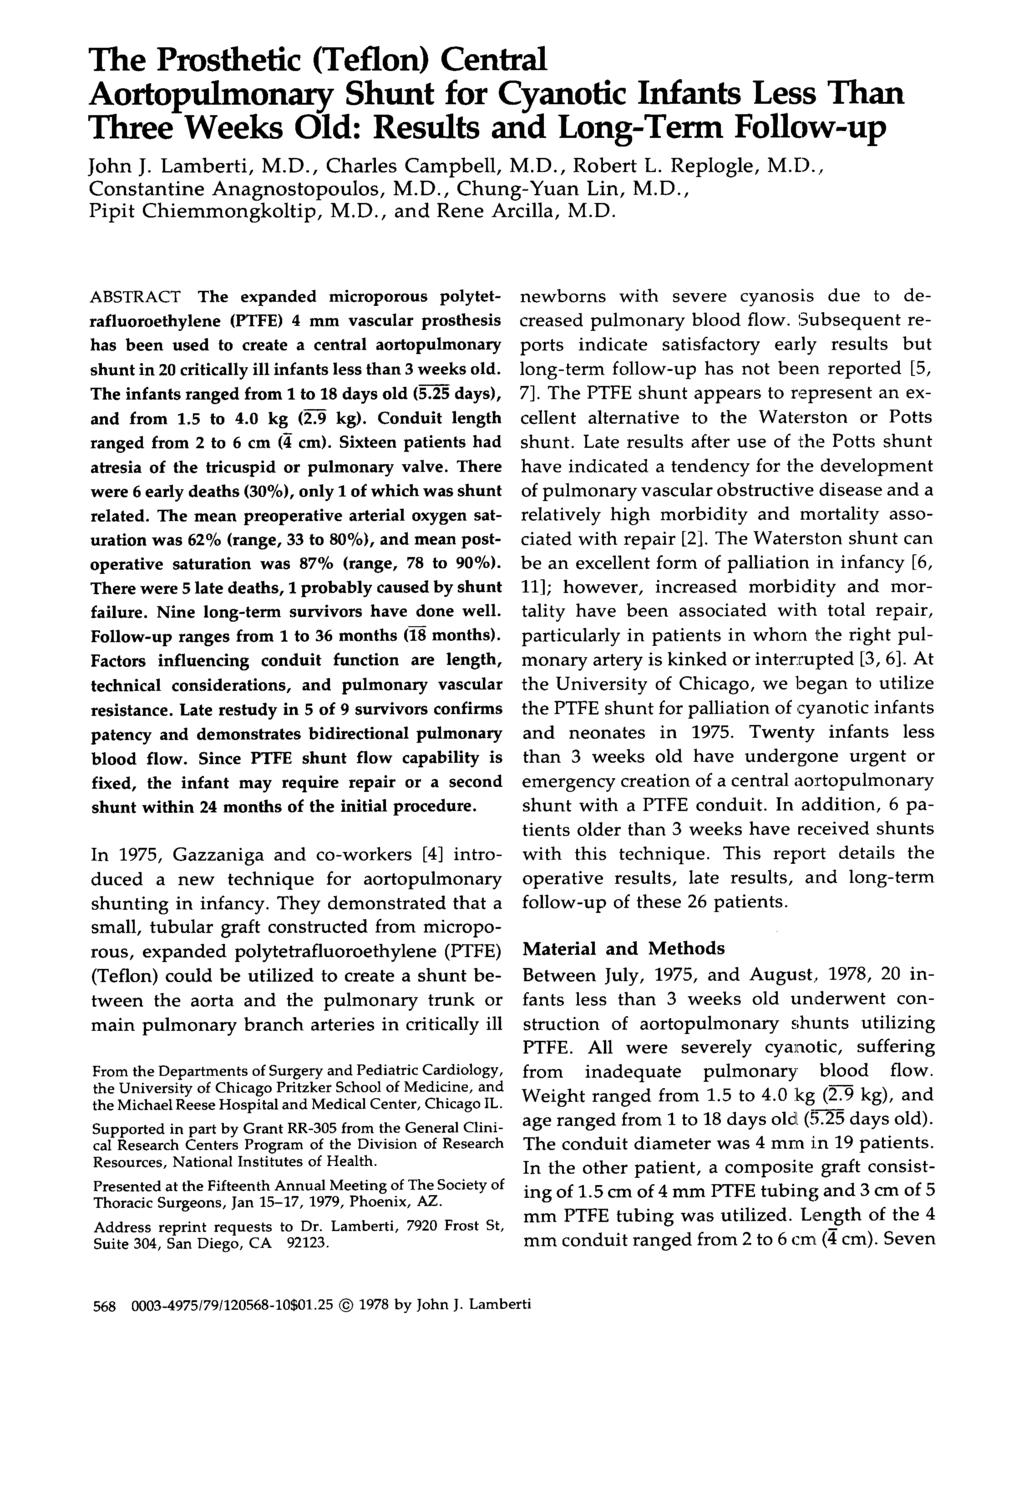 The Prosthetic (Teflon) Central Aortopulmonary Shunt for Cyanotic Infants Less Than Three Weeks Old: Results and Long-Term Follcw-up John J. Lamberti, M.D., Charles Campbell, M.D., Robert L.